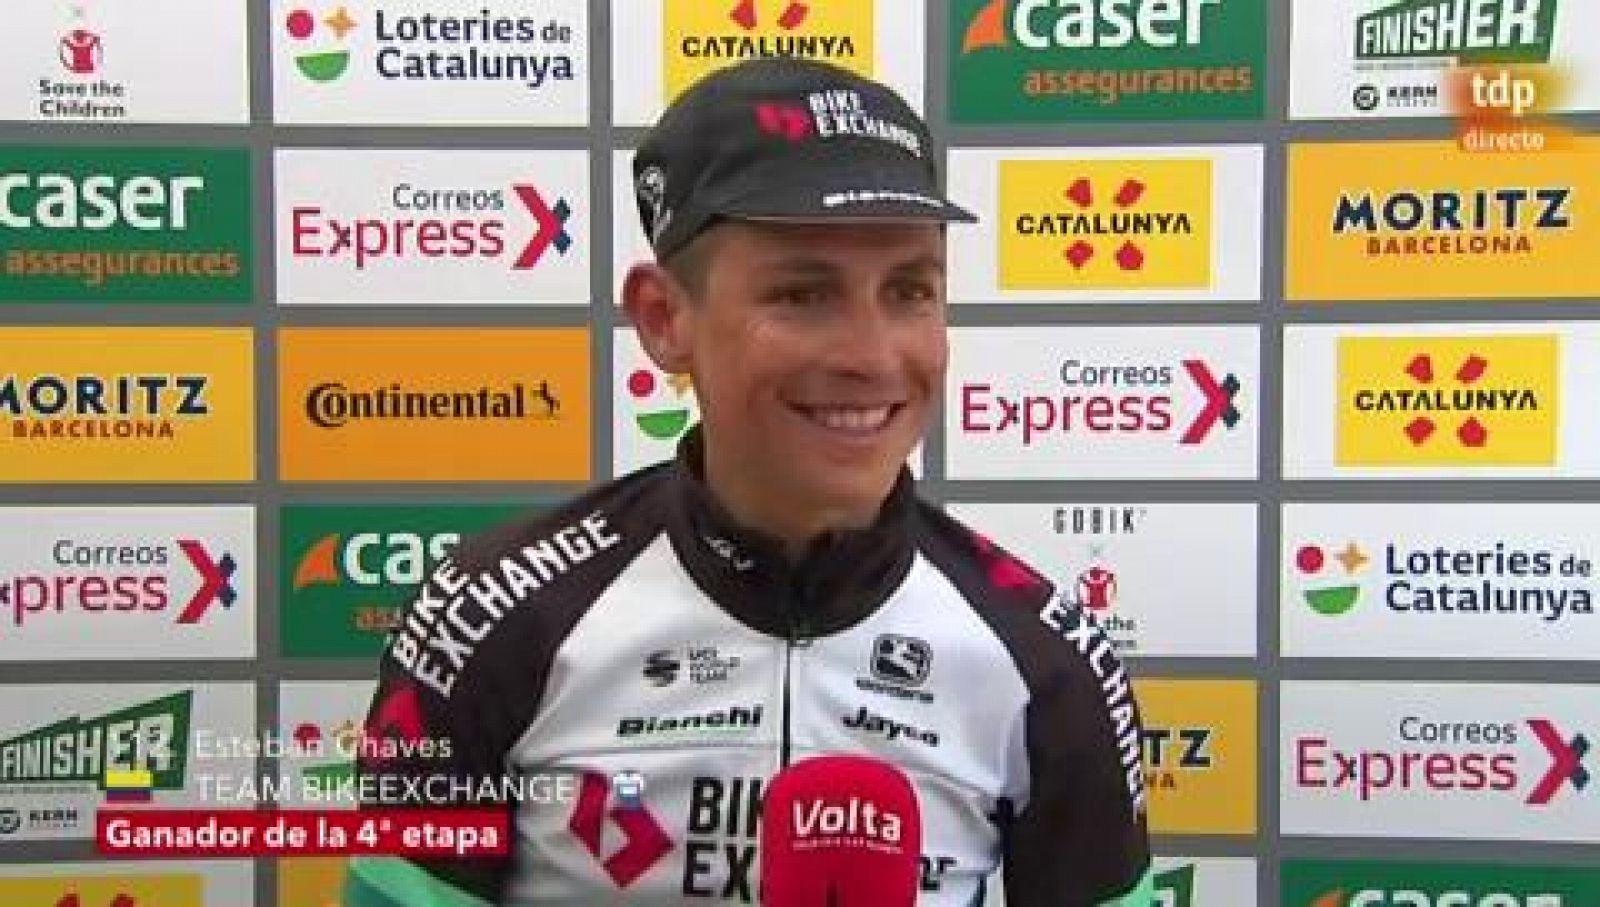 Entrevista a Esteban Chaves tras ganar la etapa 4 en la Volta a Catalunya